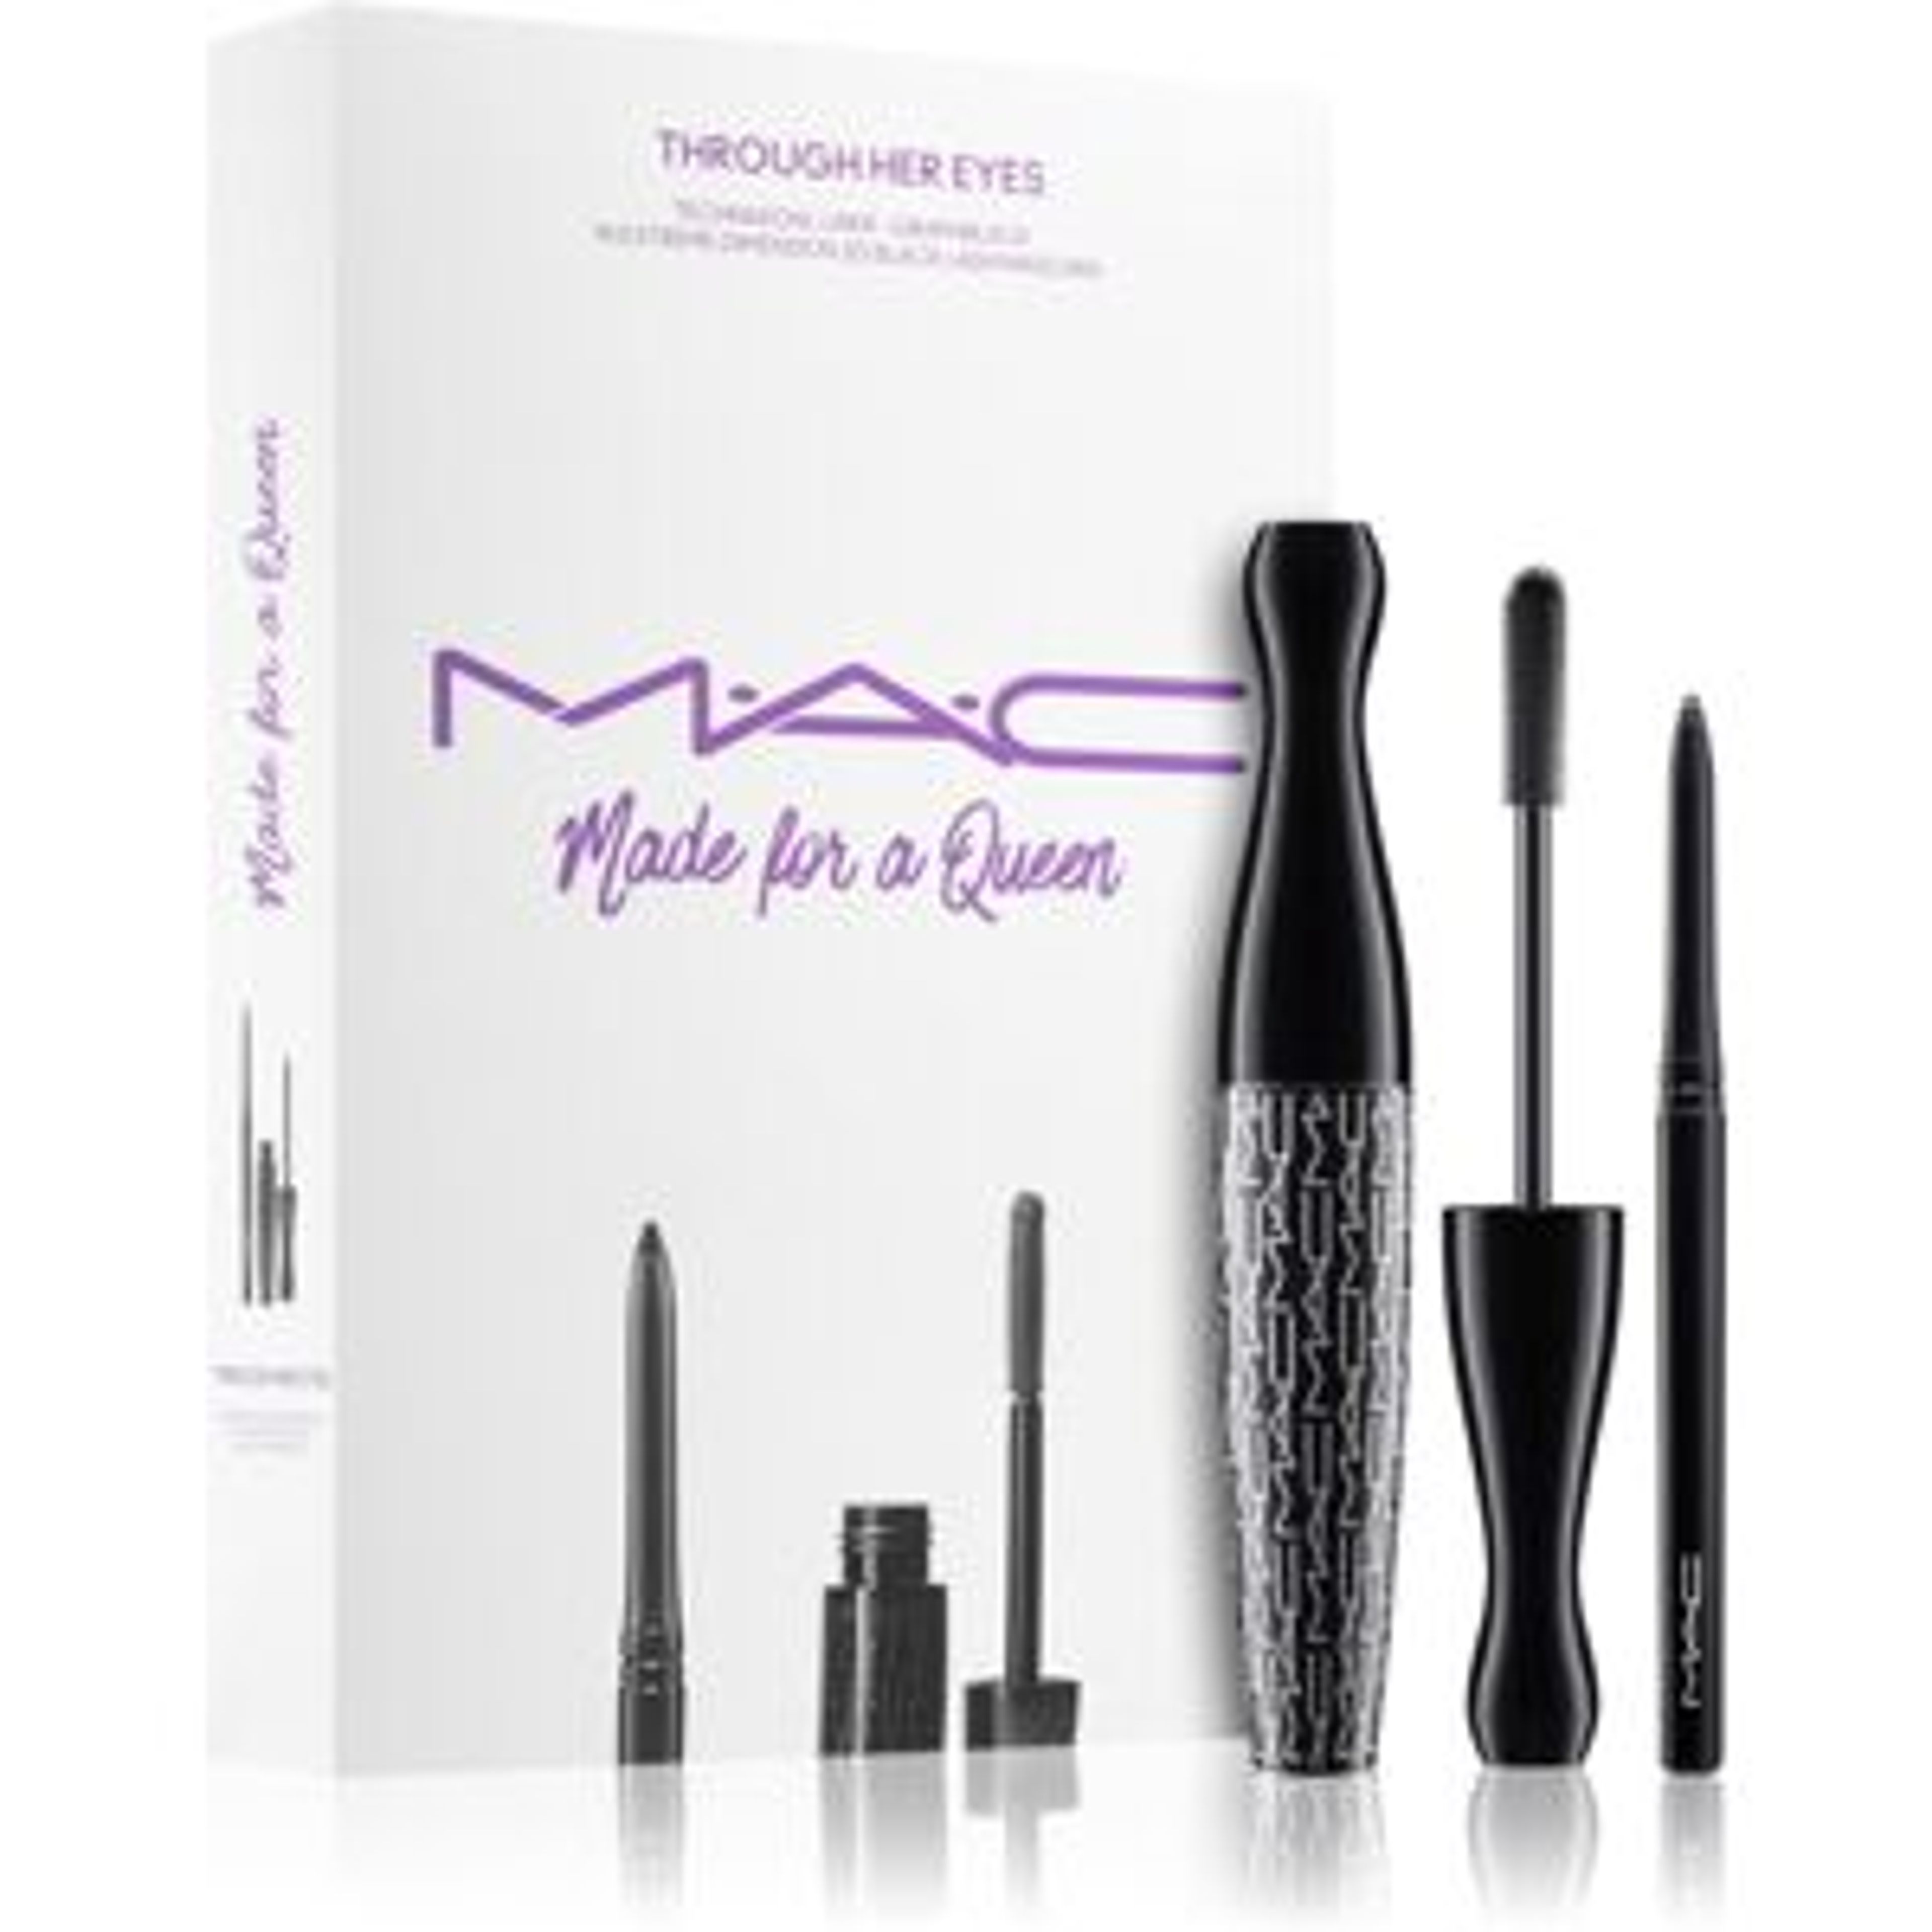 MAC Mac Through Her Eyes Kit - Made For A Queen 1